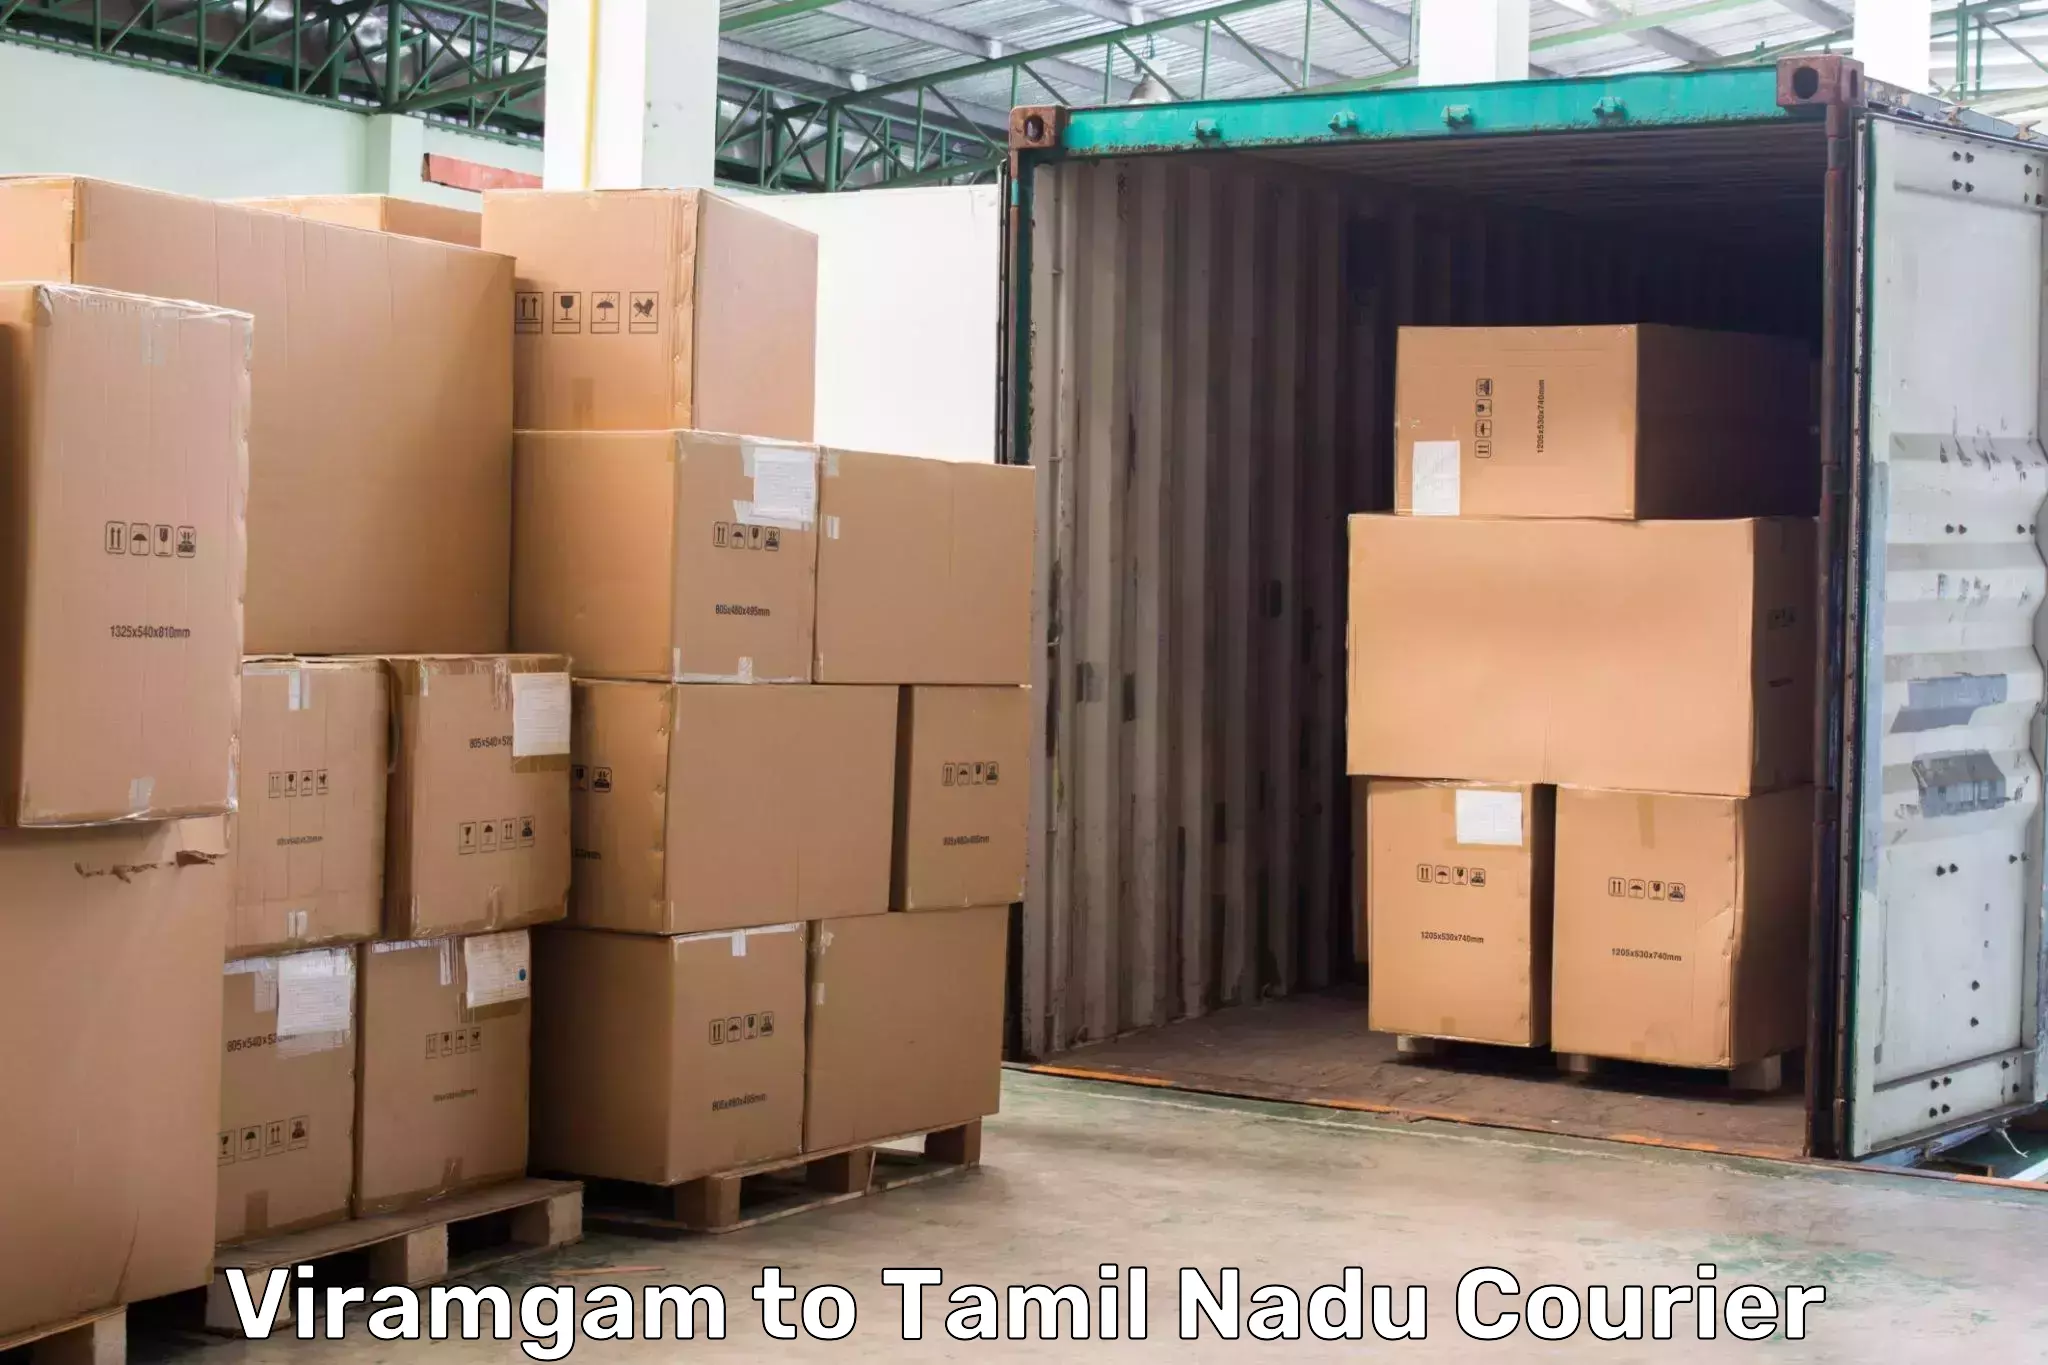 Courier service innovation Viramgam to Chennai Port